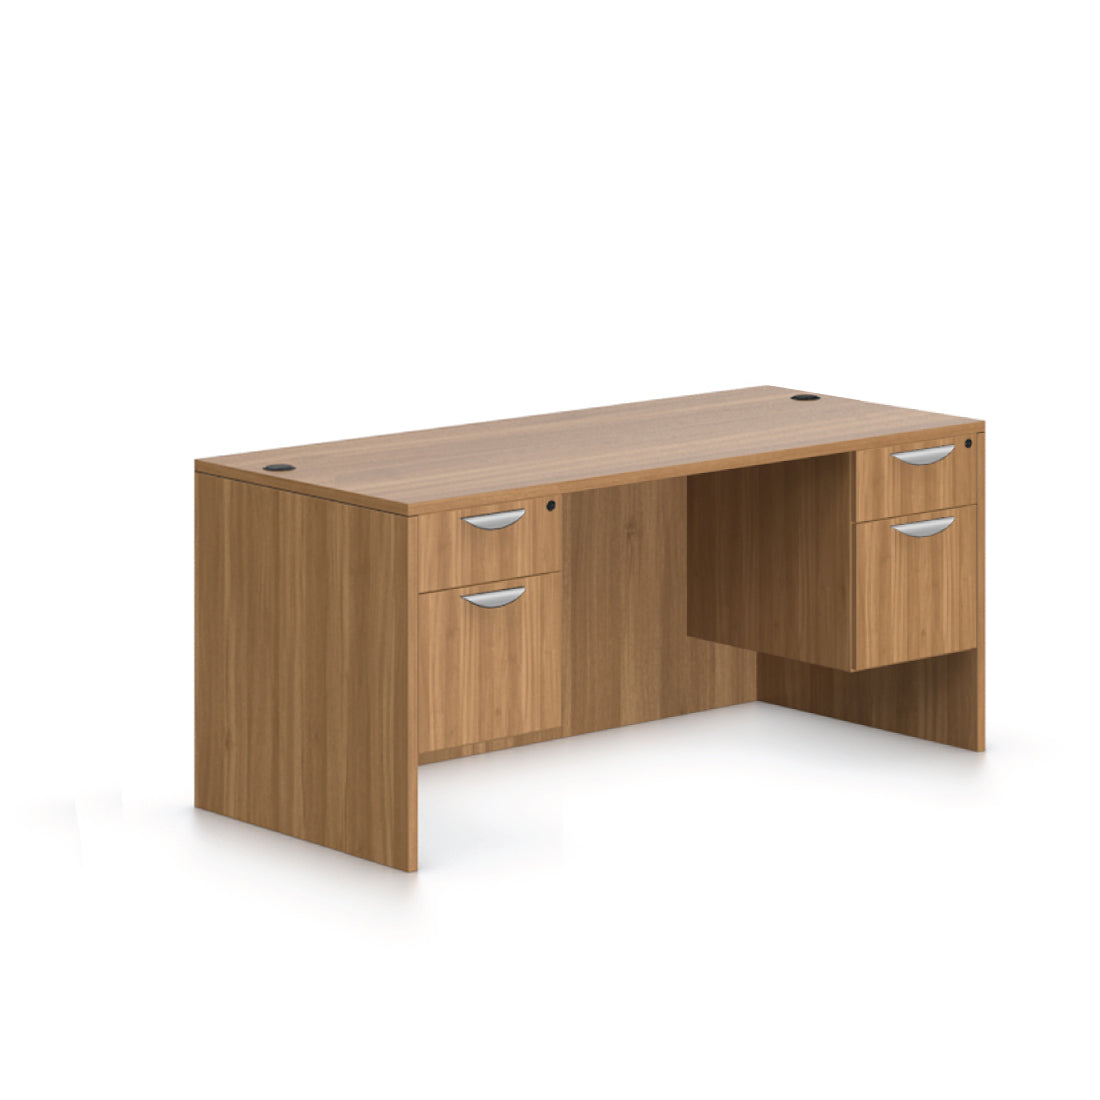 66"x30" Rectangular Desk with Two Hanging B/F pedestals - Kainosbuy.com